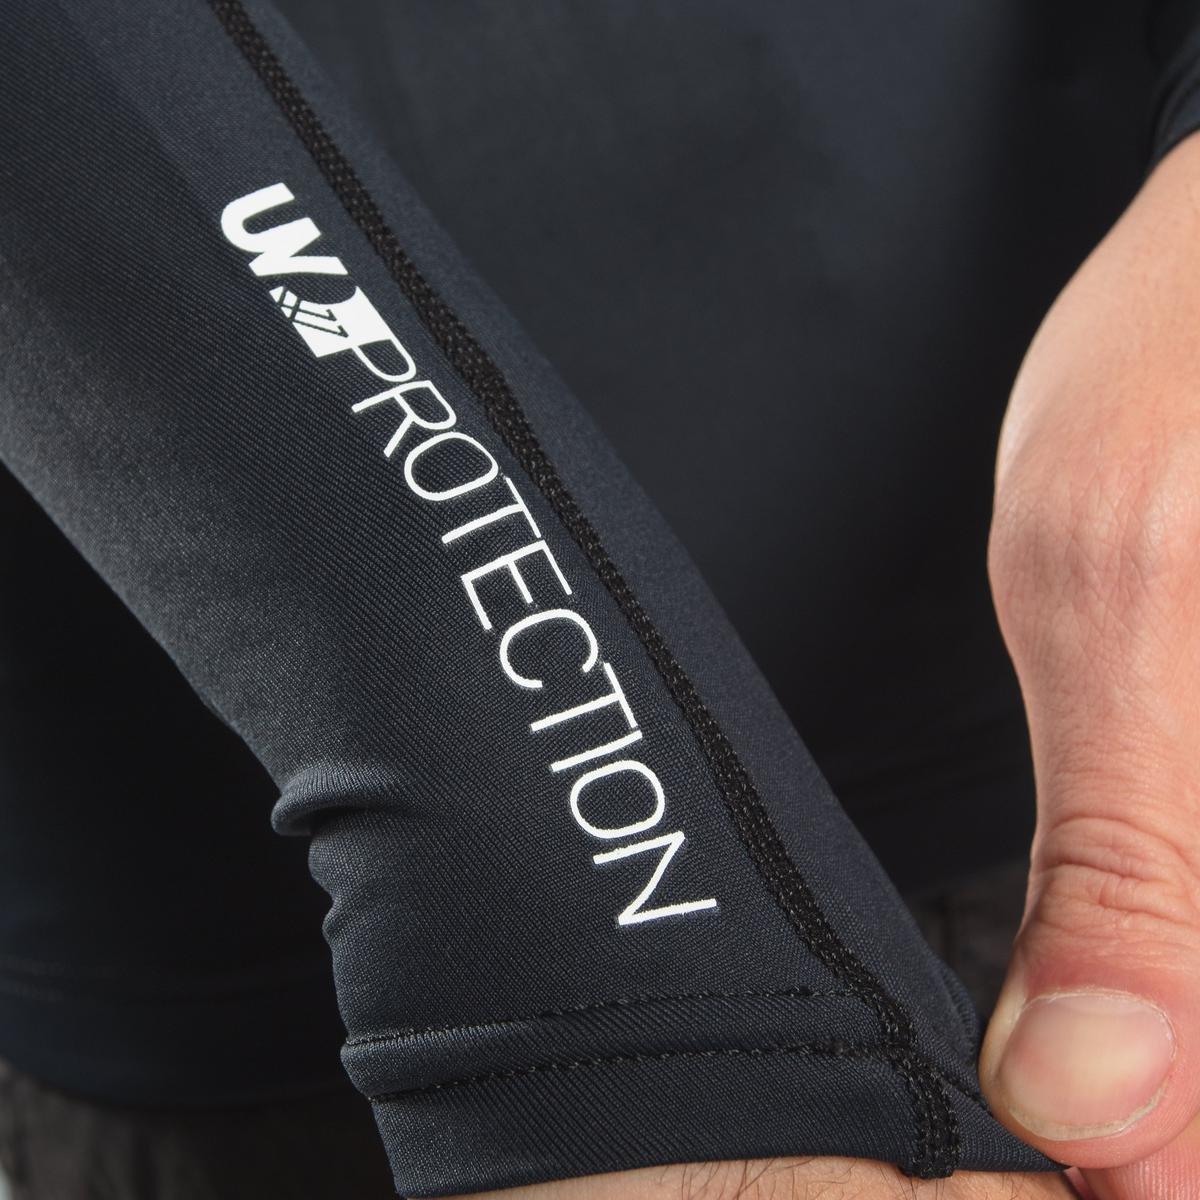 Gul Men's UV Protection Long Sleeve Rash Vest